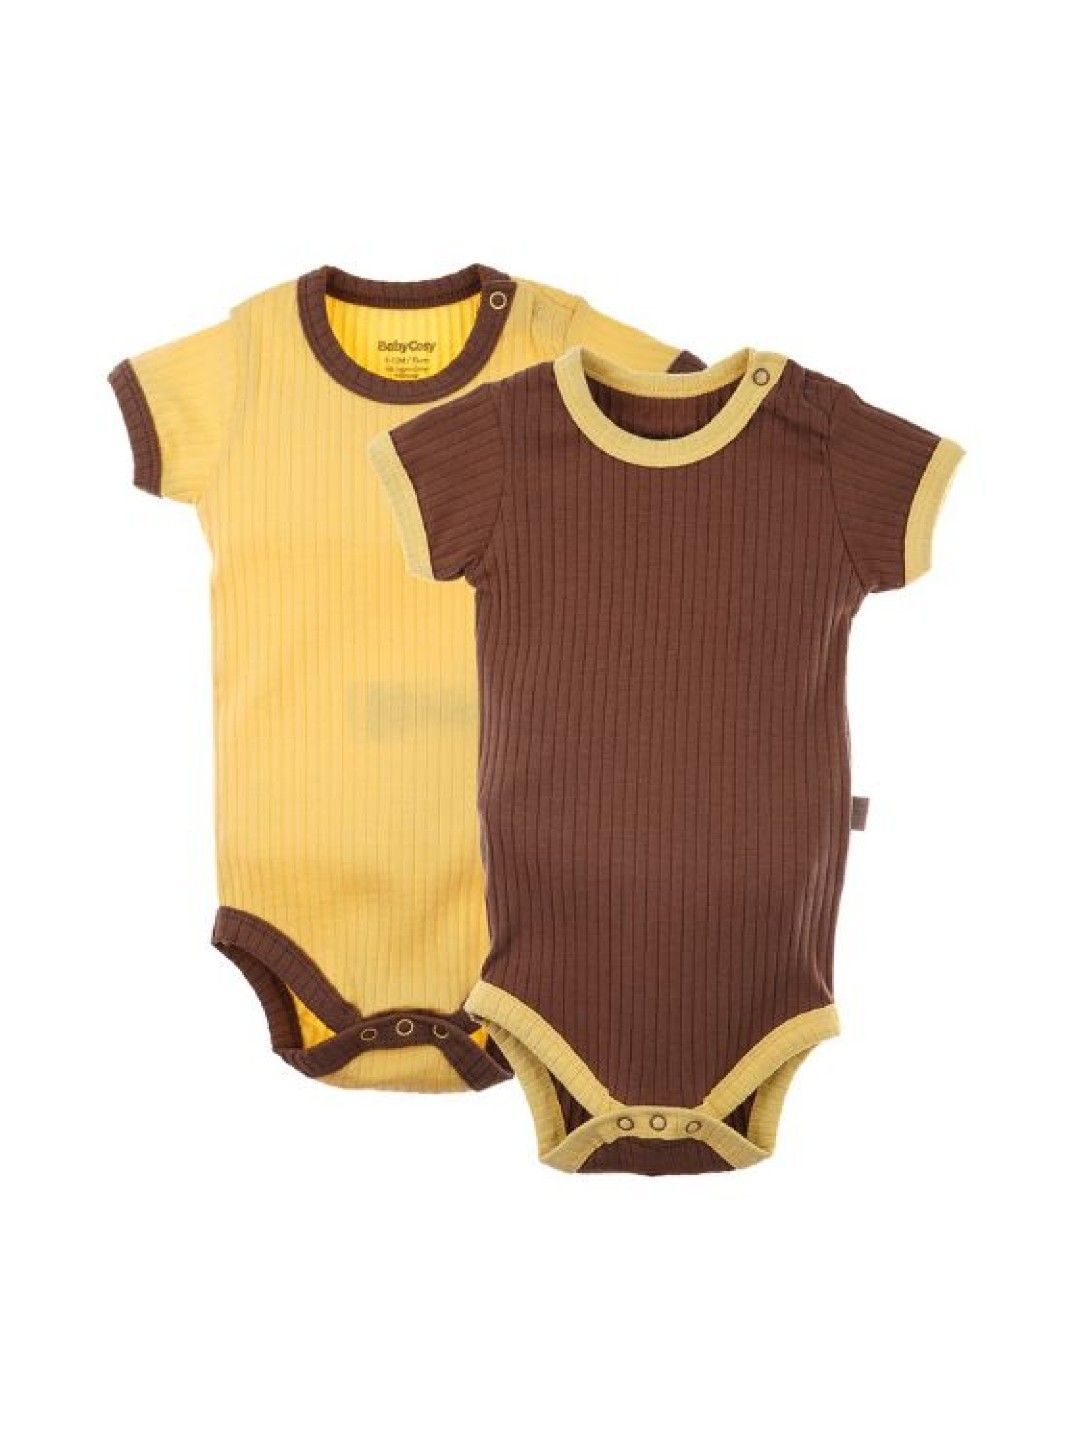 bean fashion Babycosy Organic Shortsleeves Bodysuit Set of 2